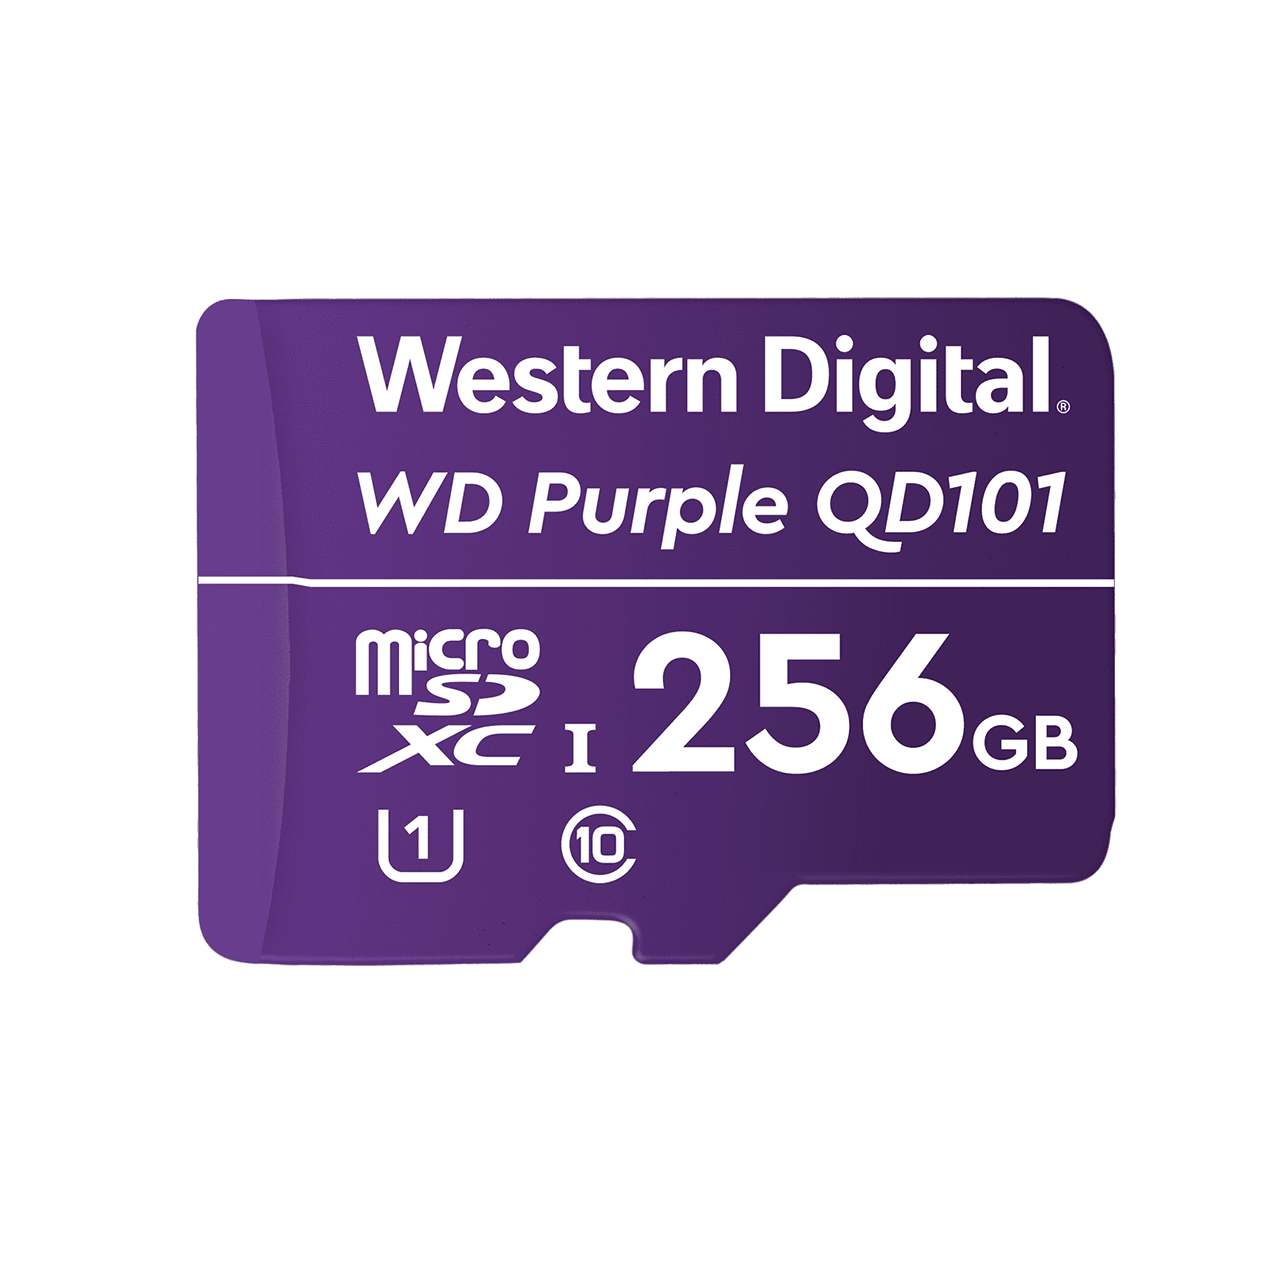 Western Digital WD Purple SC QD101